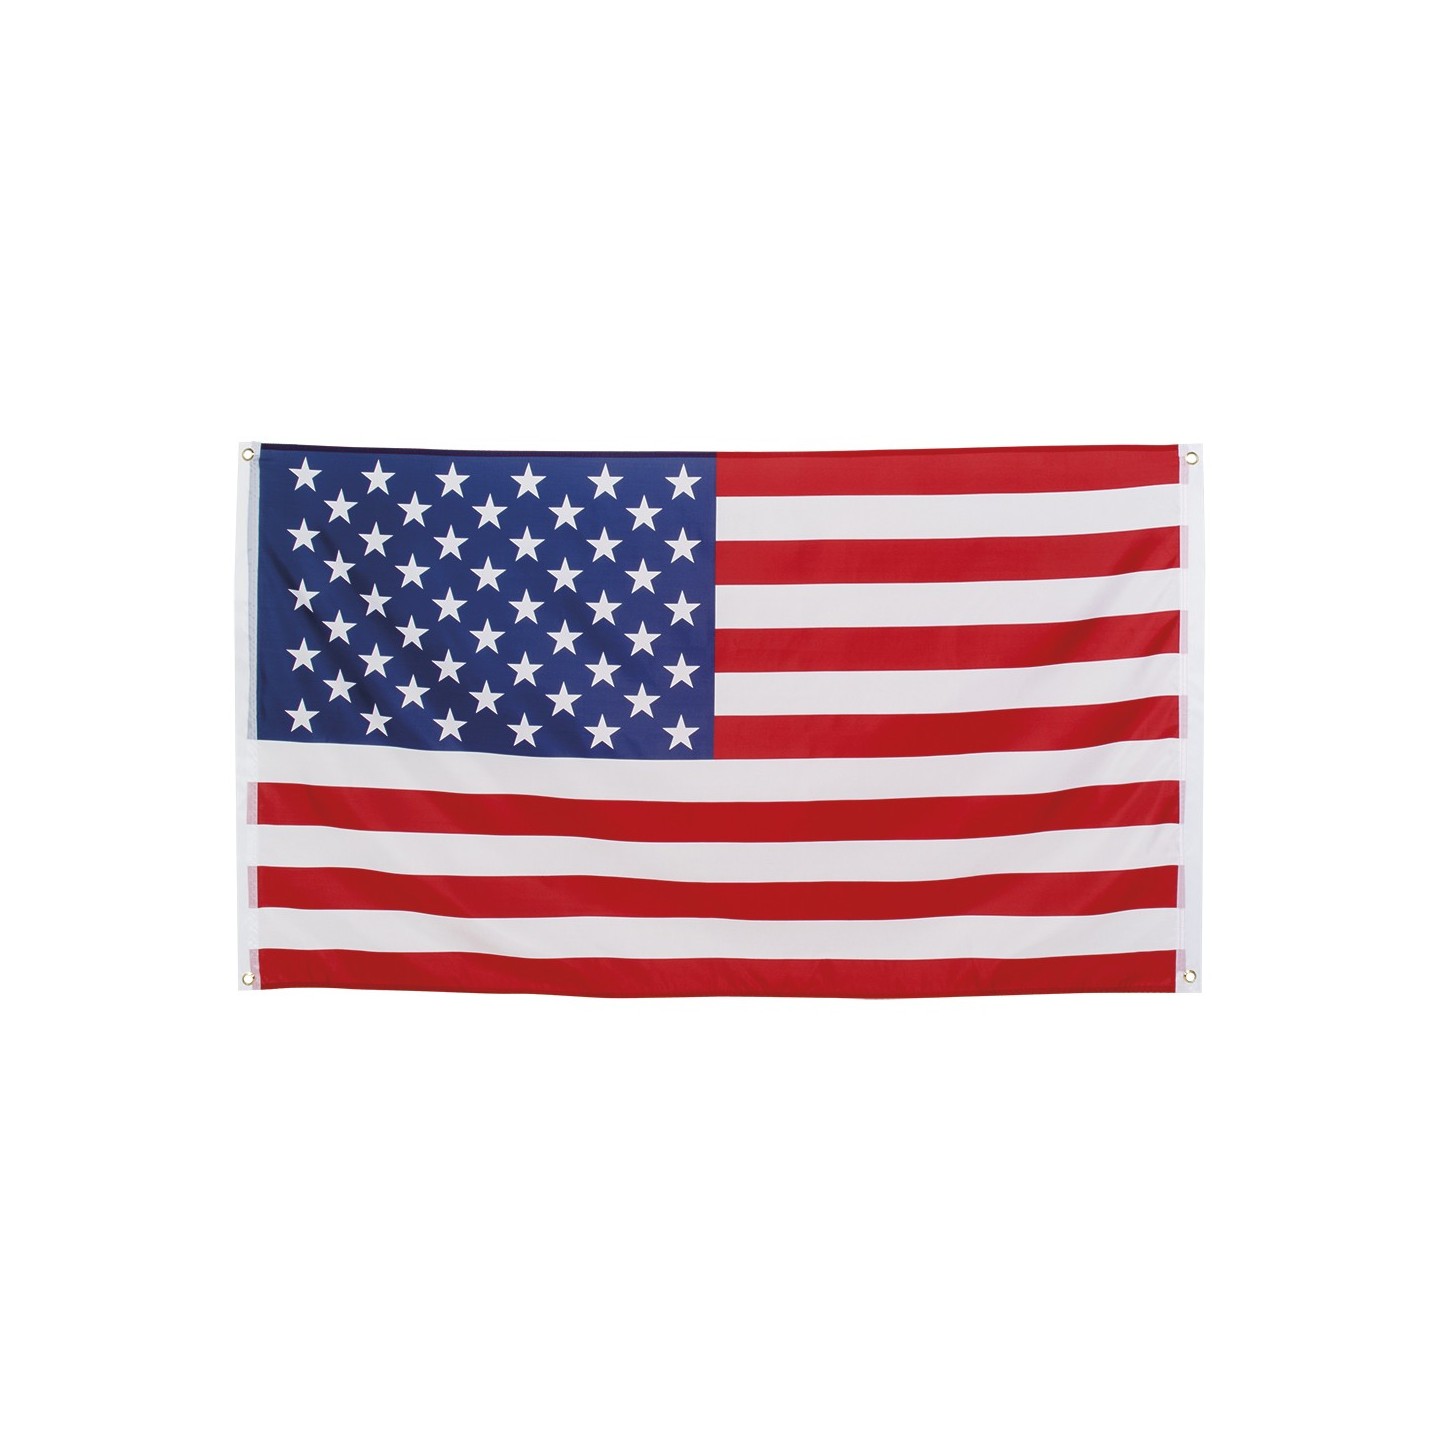 Amerikaanse vlag groot kopen